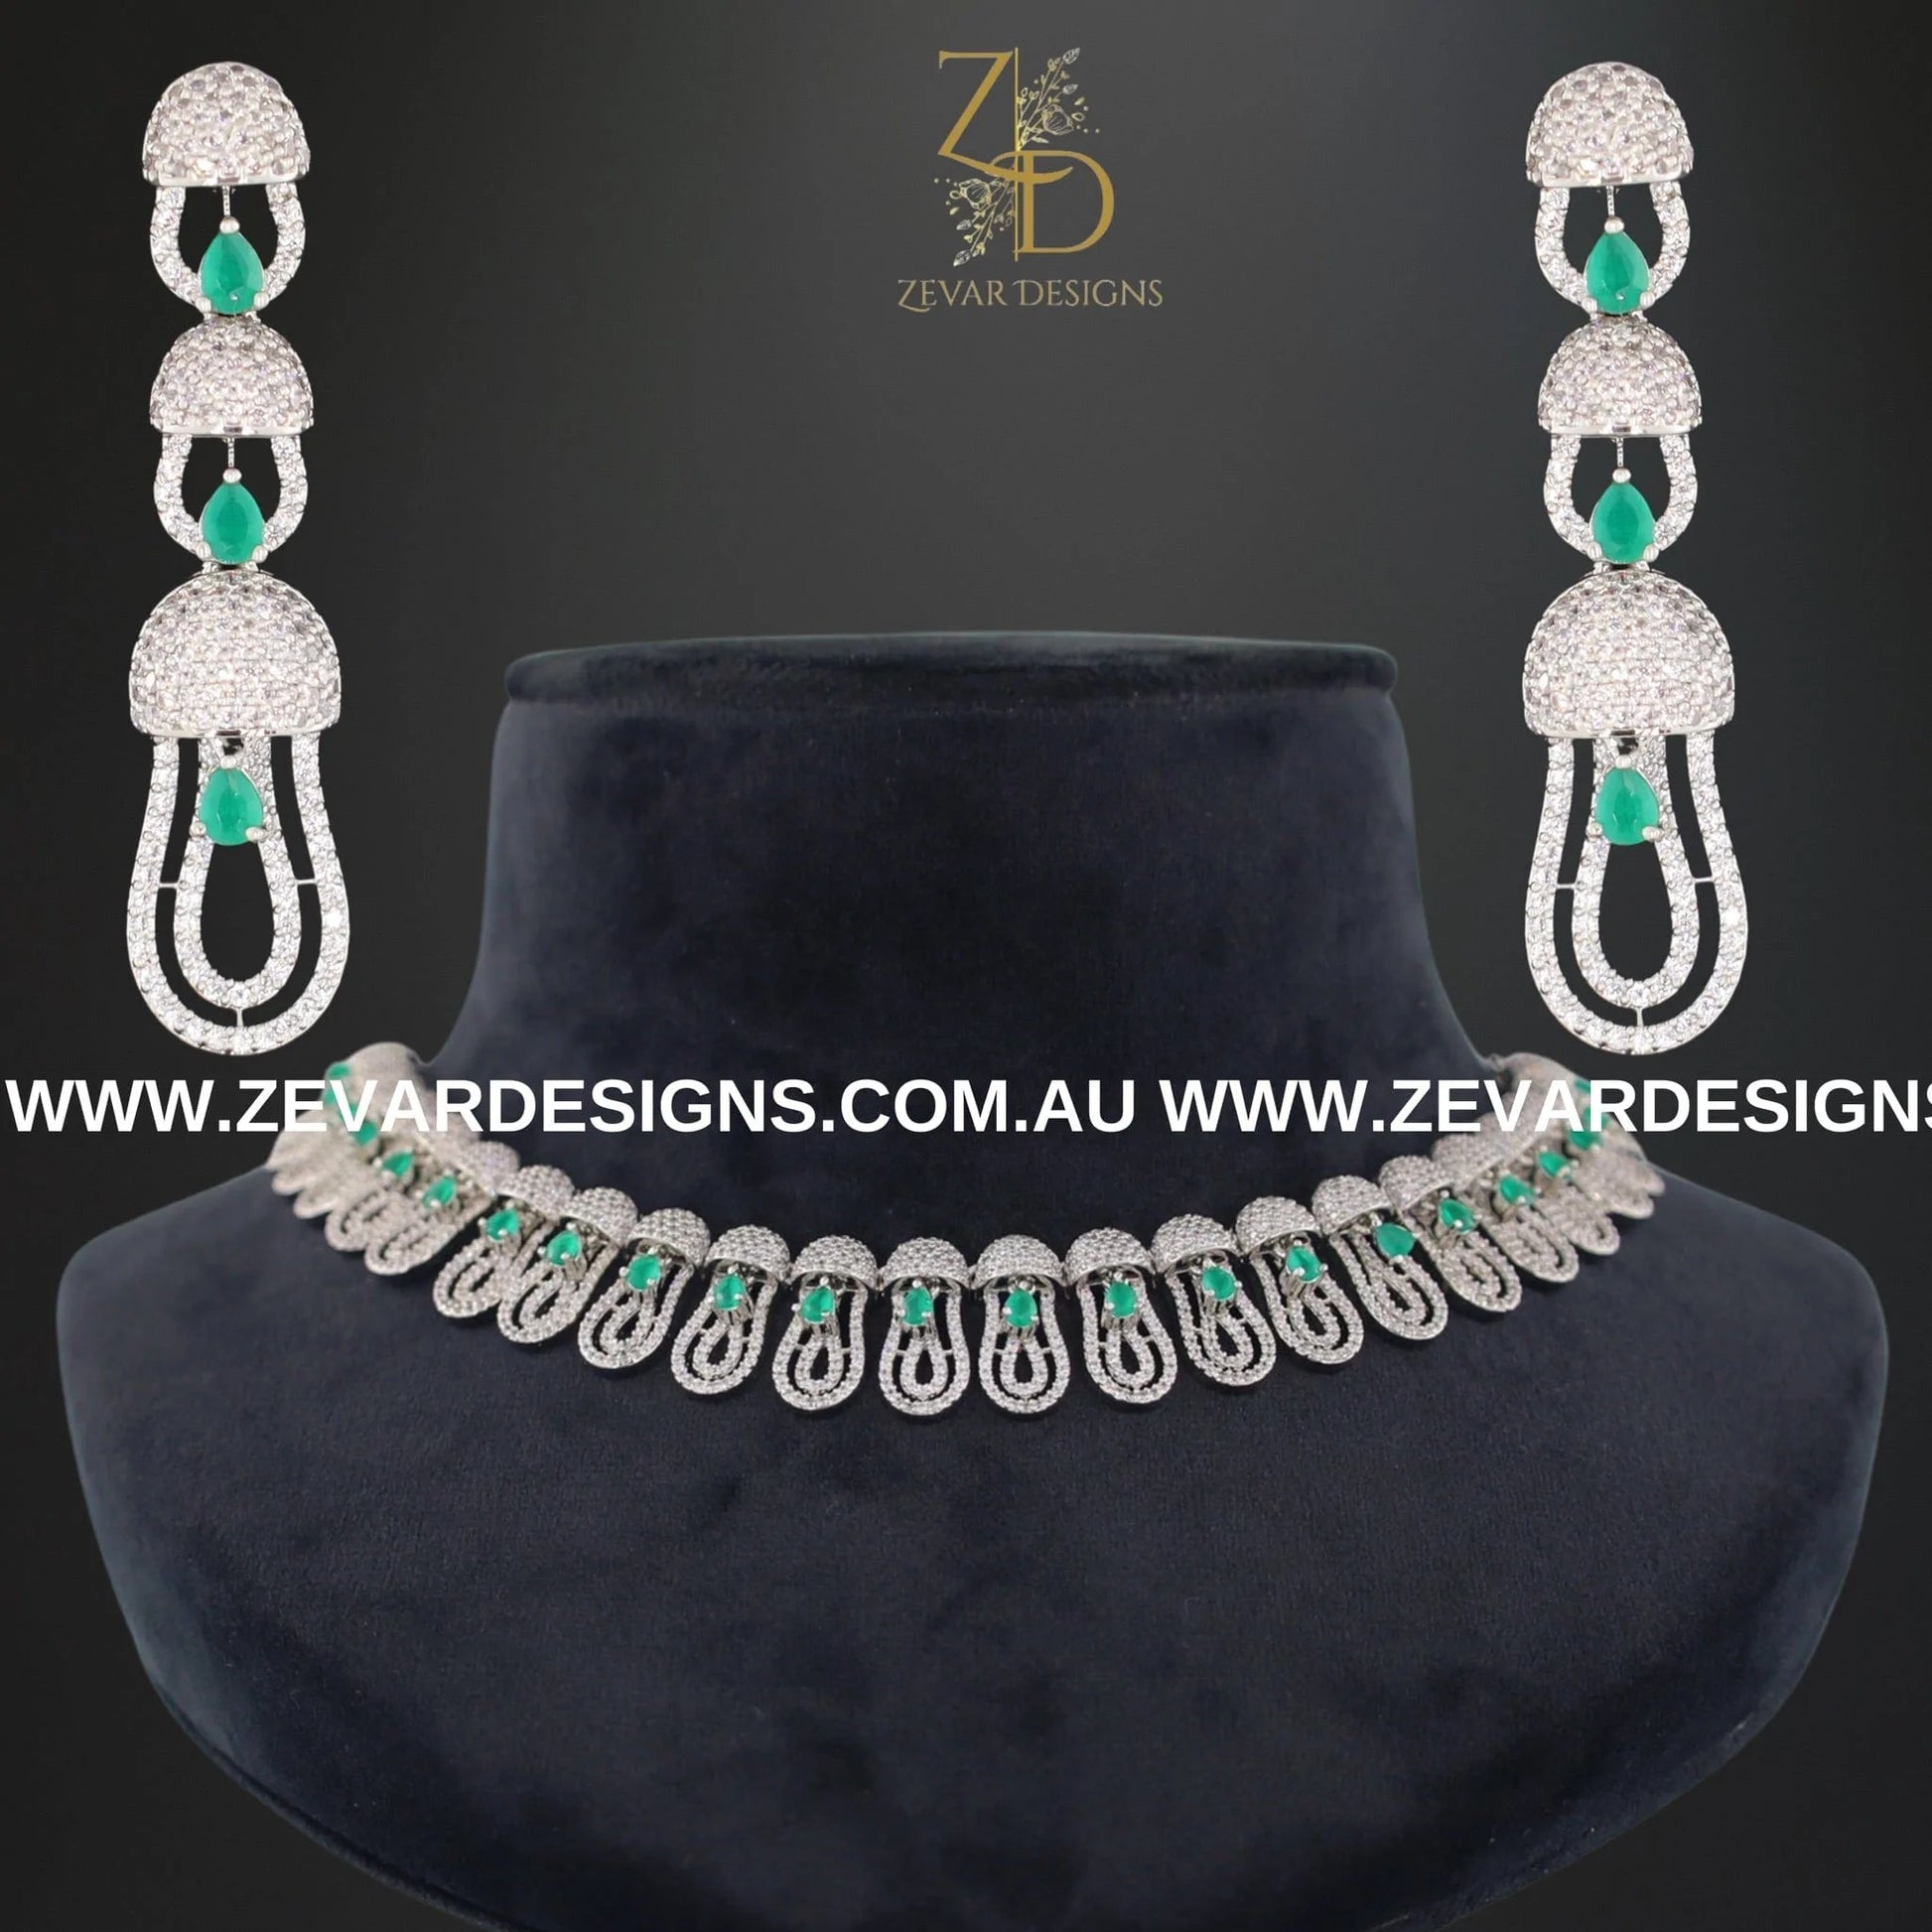 Zevar Designs Necklace Sets - AD AD/Zircon Necklace Set - White Rhodium and Emerald